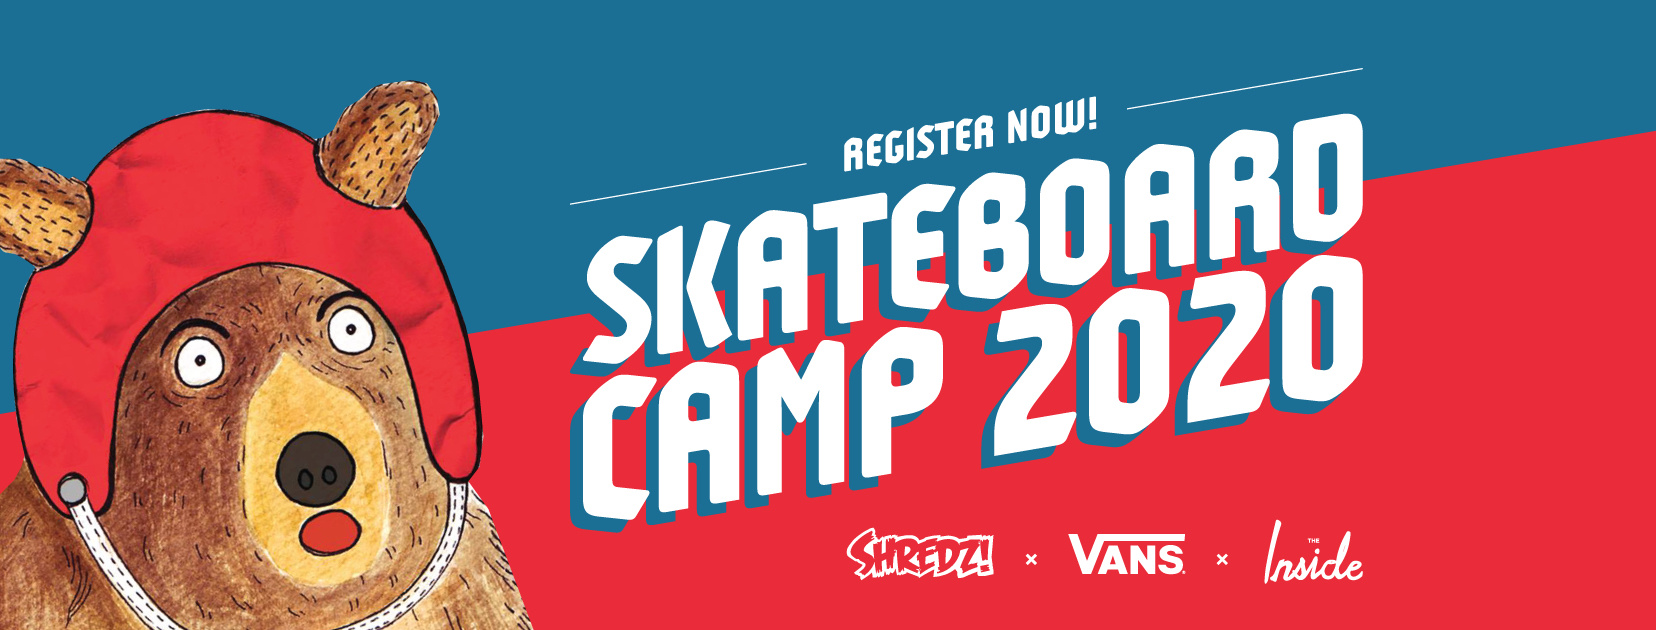 Shredz Skateboard Camps 2019